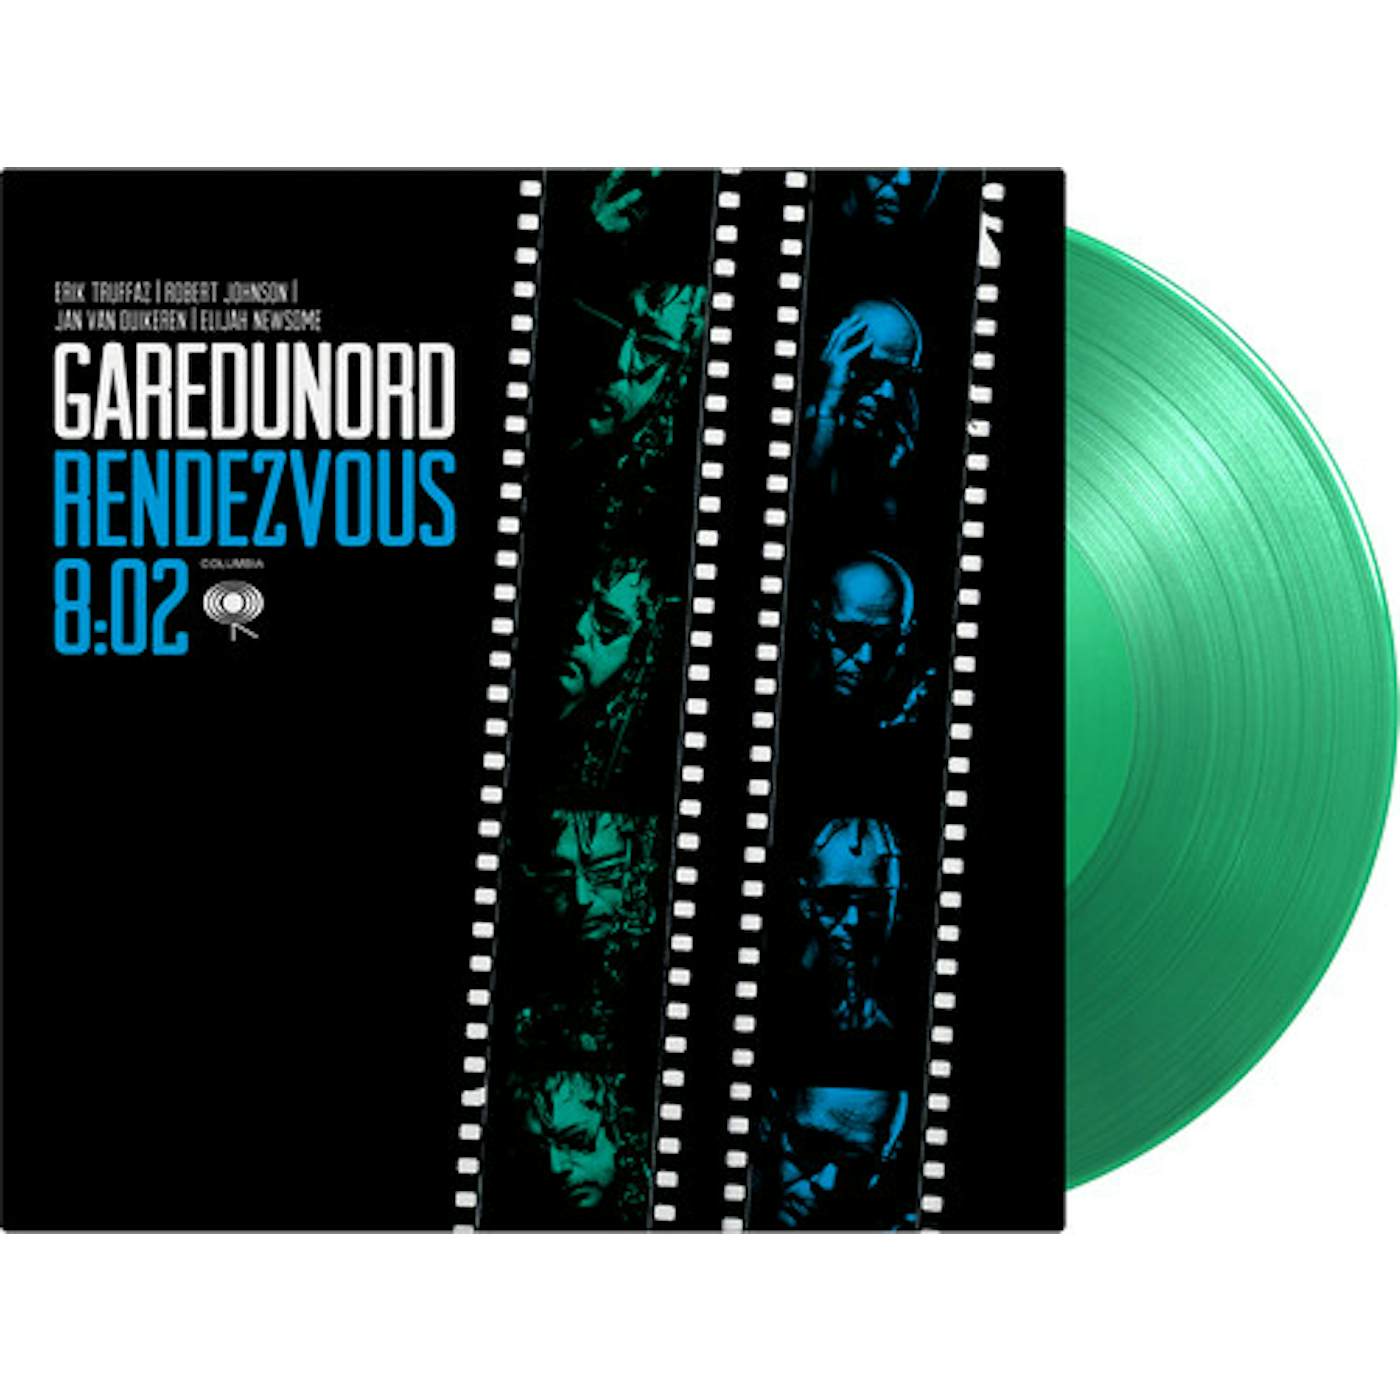 Gare Du Nord RENDEZVOUS 8:02 Vinyl Record